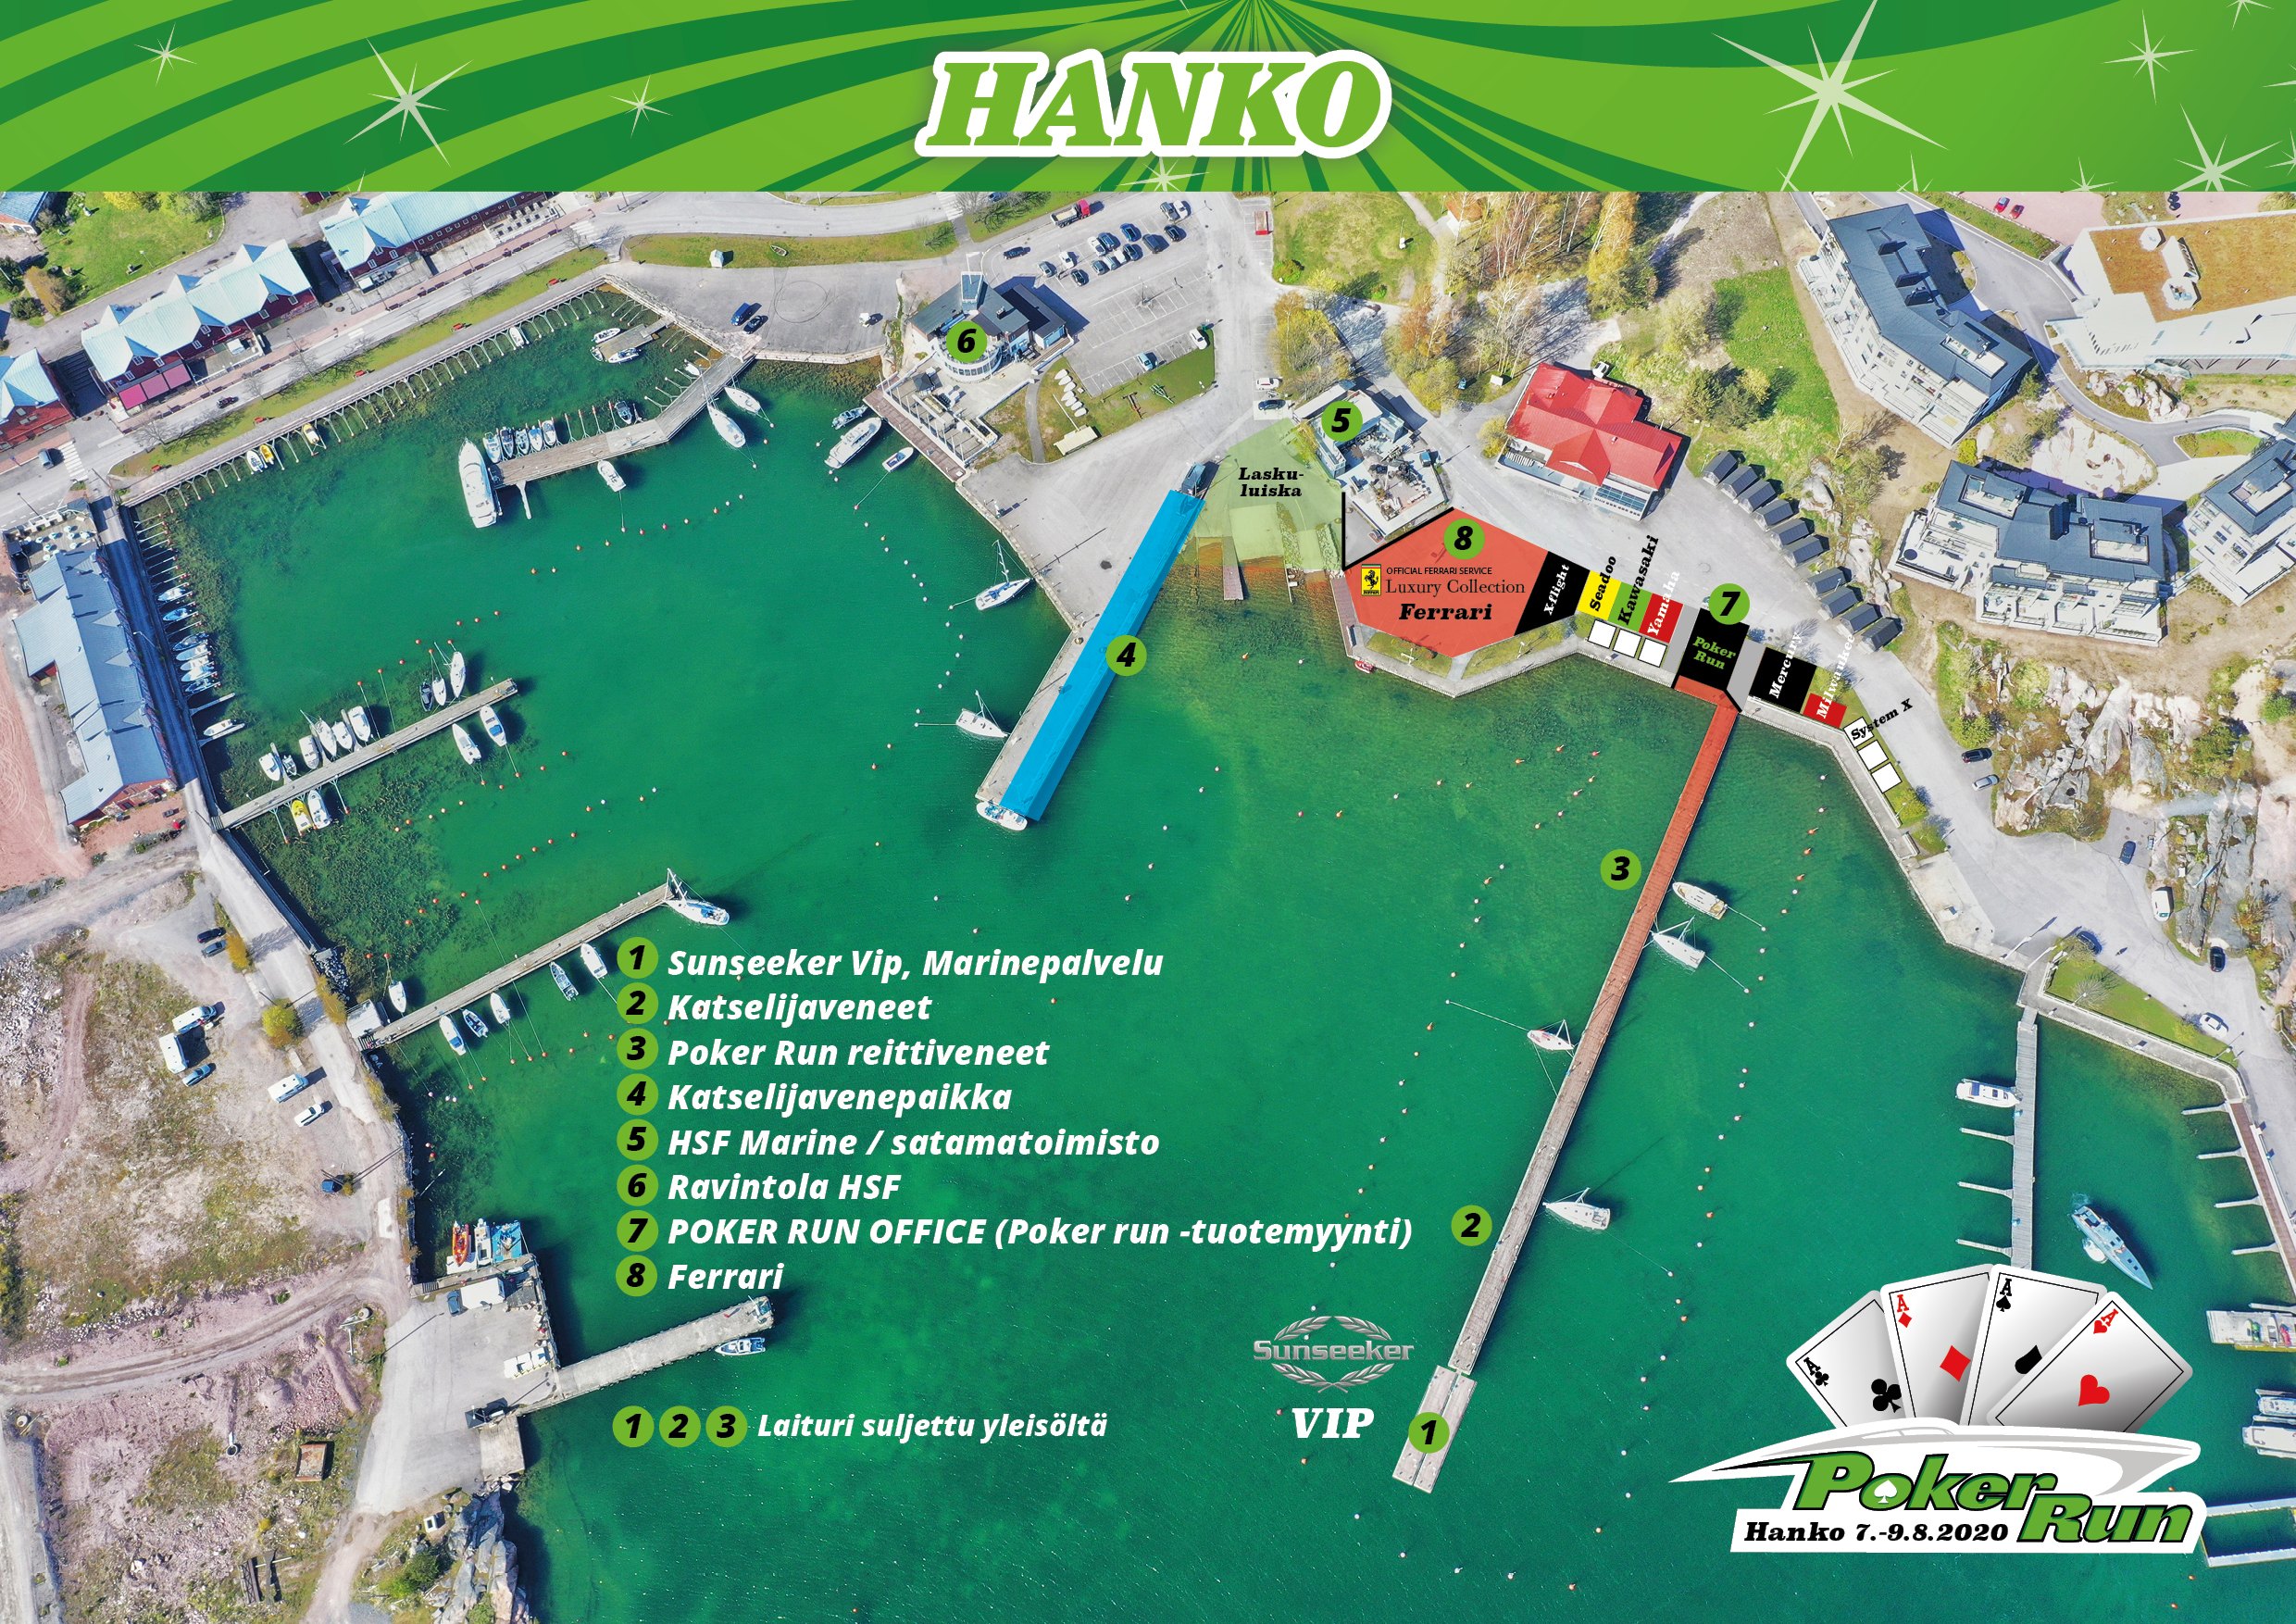 PokerRun kartta Hanko - Poker Run